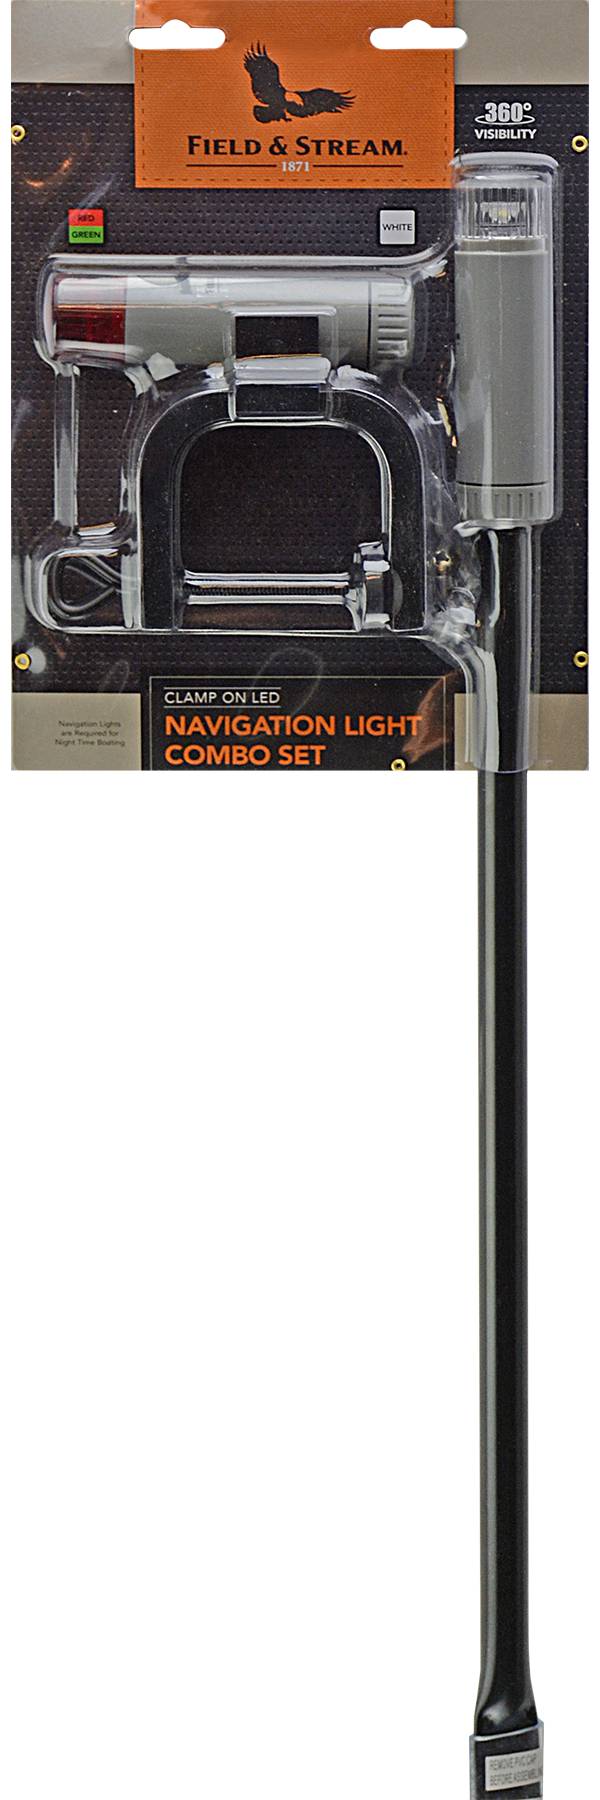 Field & Stream Navigation Light Combo Set product image